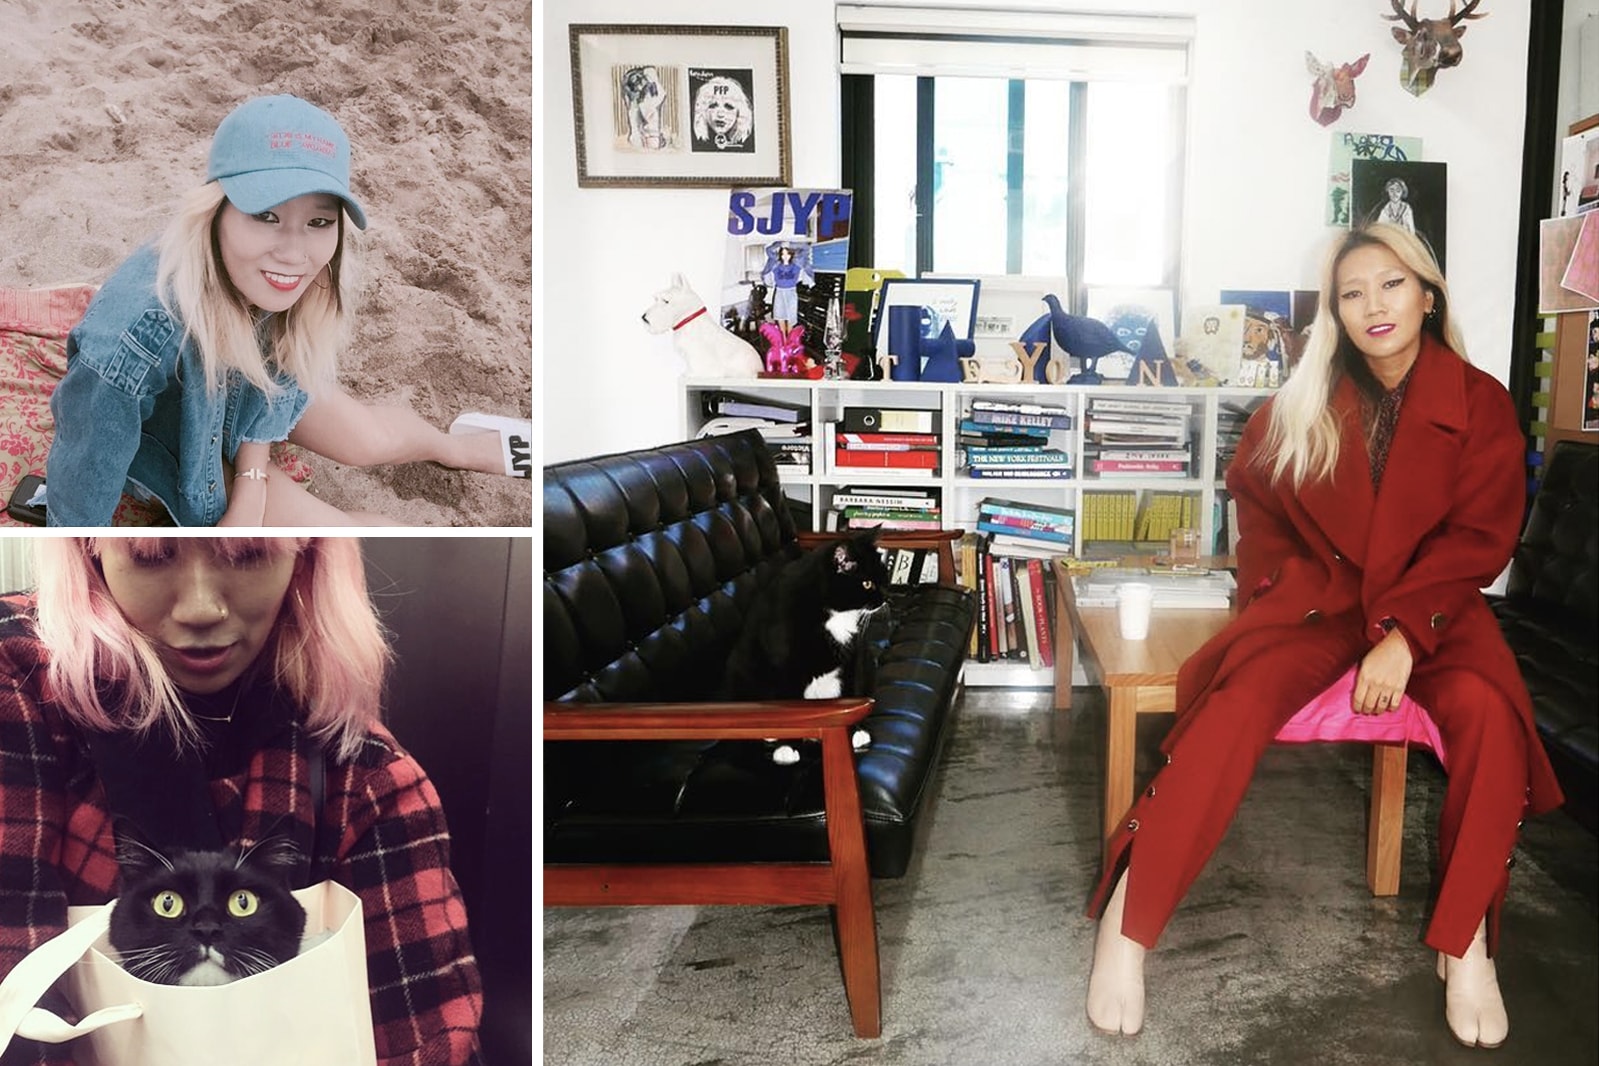 Korean instagram style influencer yoon ambush irene kim hoyeon jung fashion